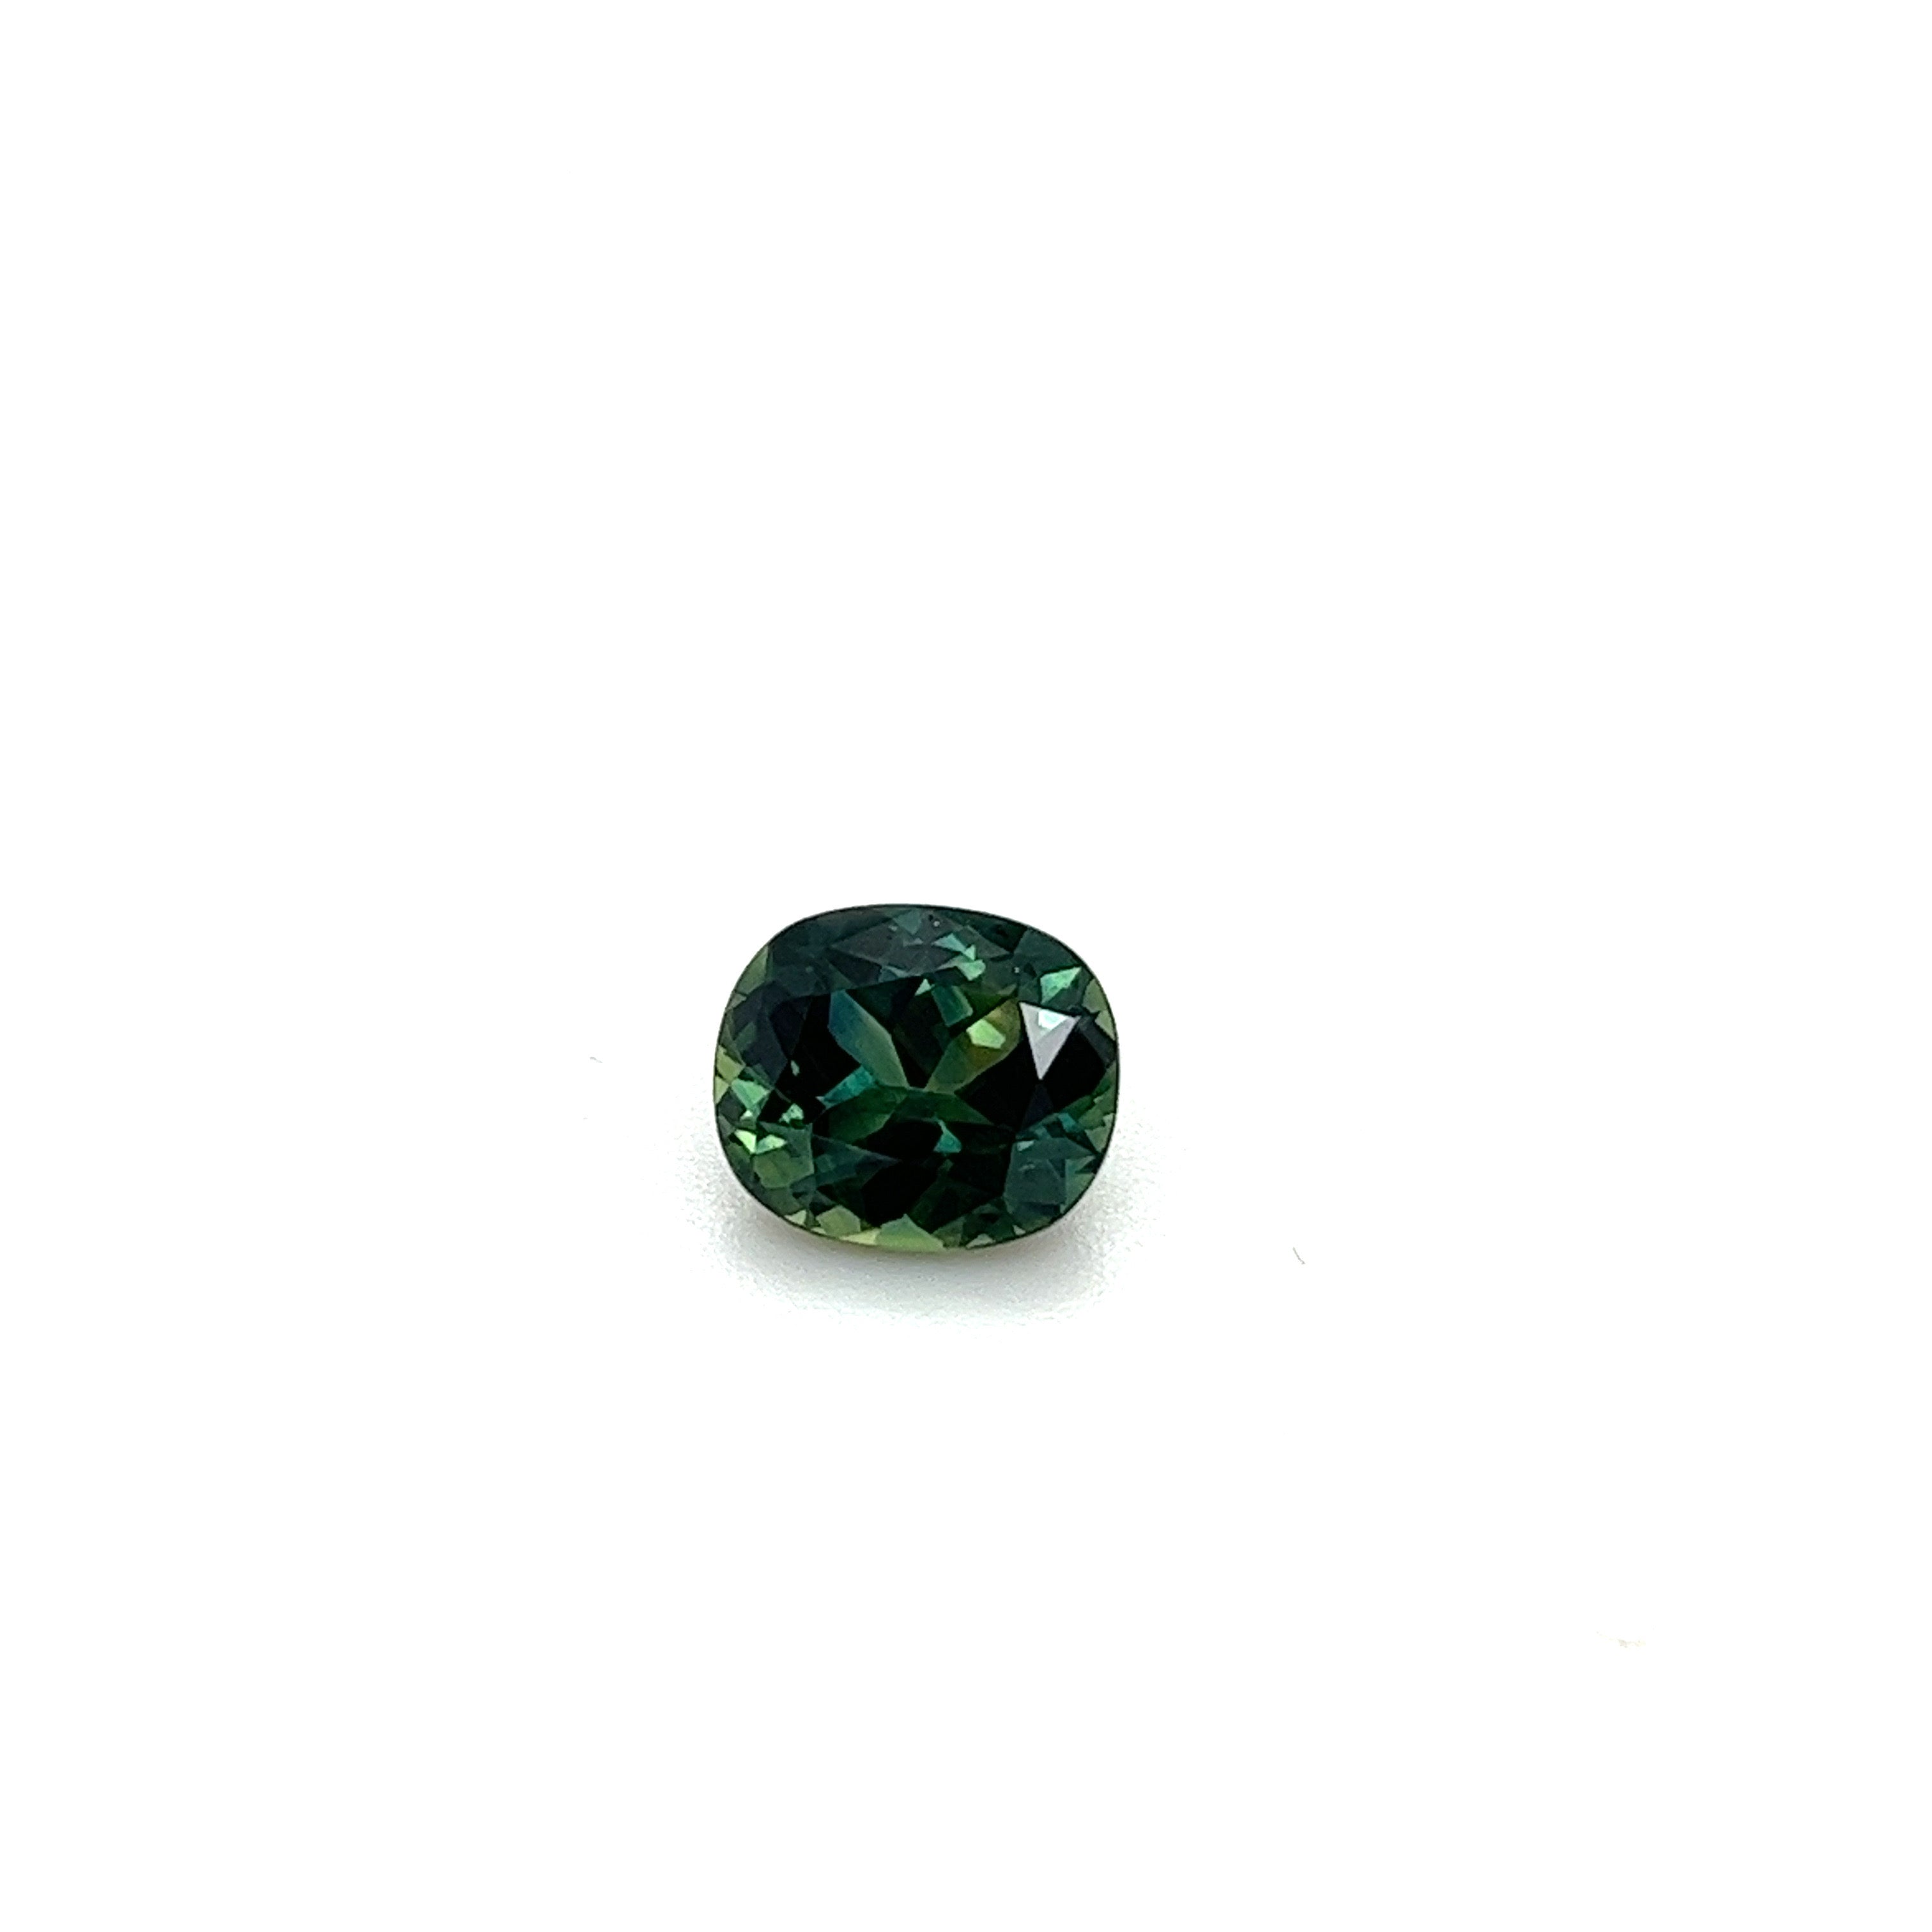 Australia Parti Sapphire Gemstone; Natural Untreated Australia Sapphire, 2.400cts - Mark Oliver Gems